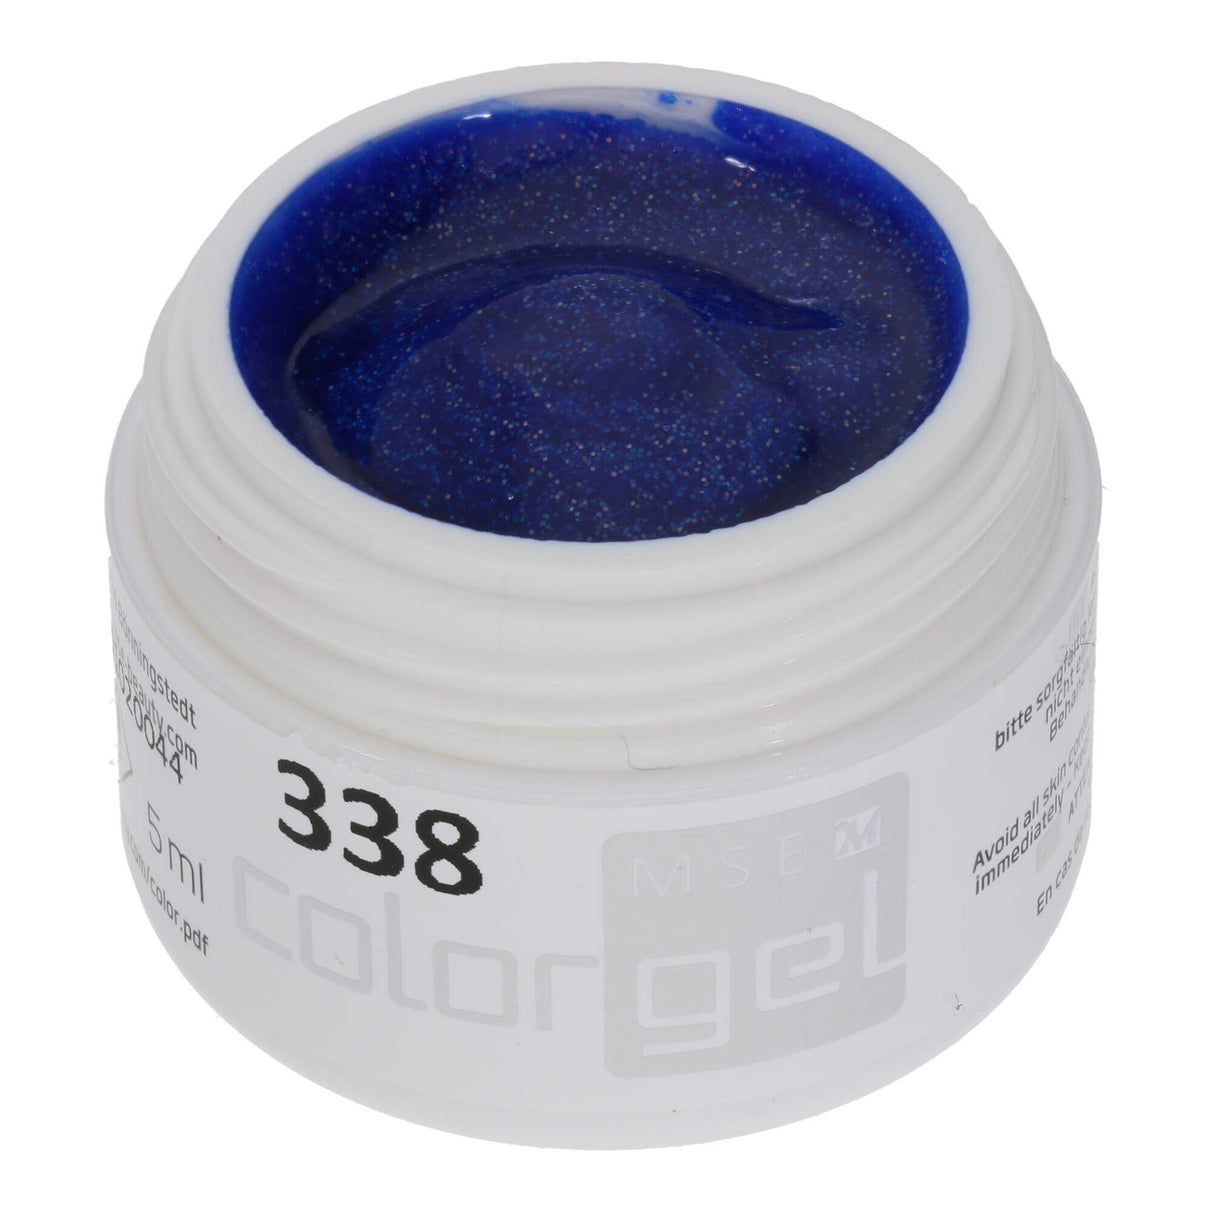 # 338 Premium GLITTER Color Gel 5ml Royal blue gel with green iridescent glitter